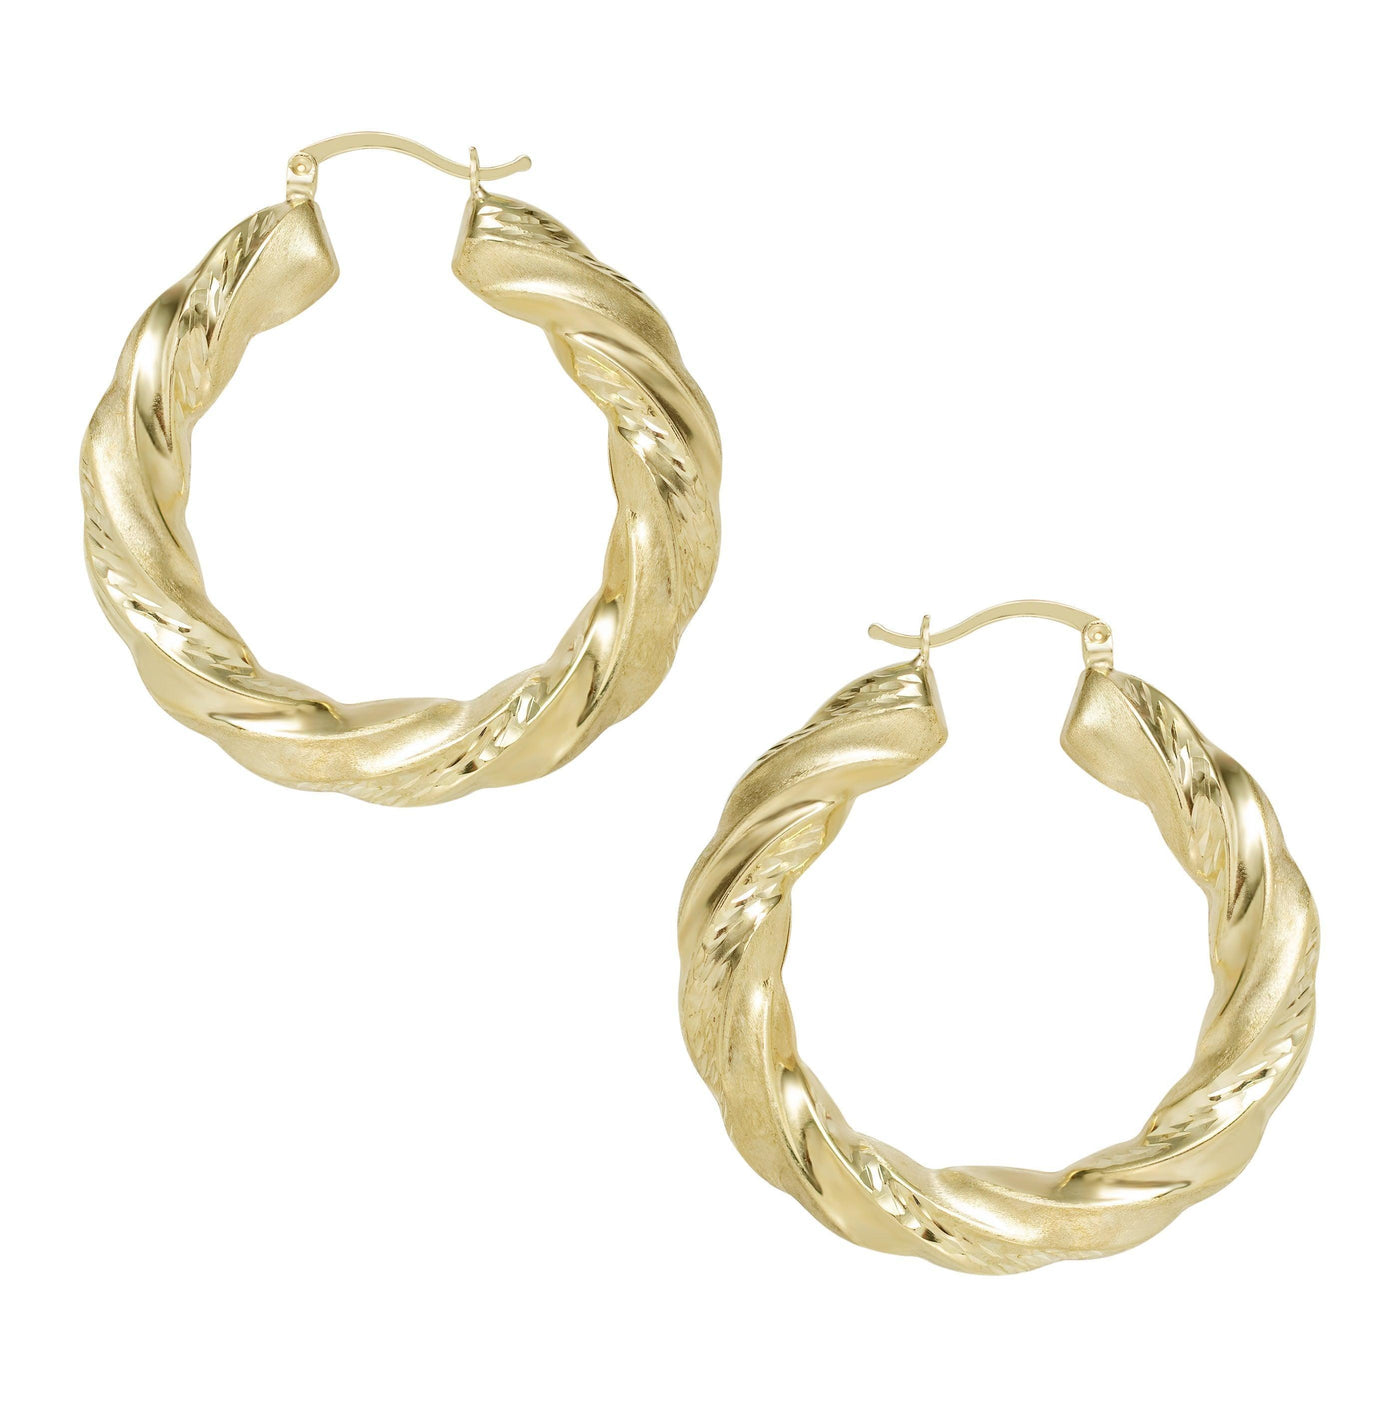 1 3/4" 45mm Graduated Twisted Diamond Cut Hoop Earrings 10K Yellow Gold - bayamjewelry